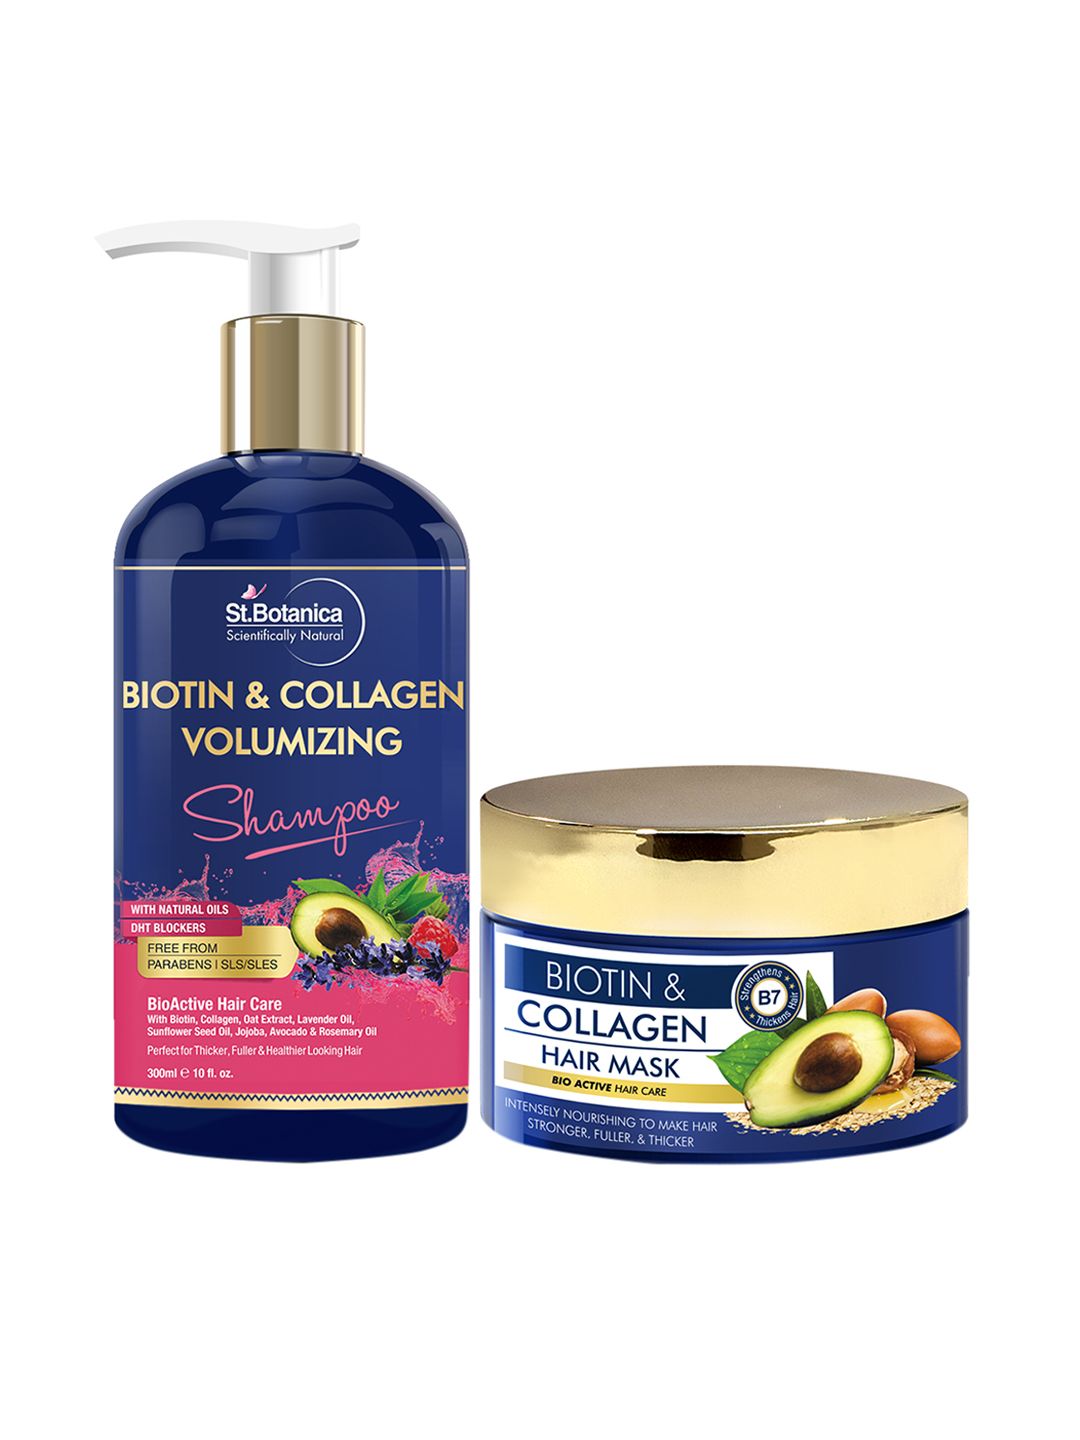 St.Botanica Biotin & Collagen Shampoo + Hair Mask - 500 ml Price in India